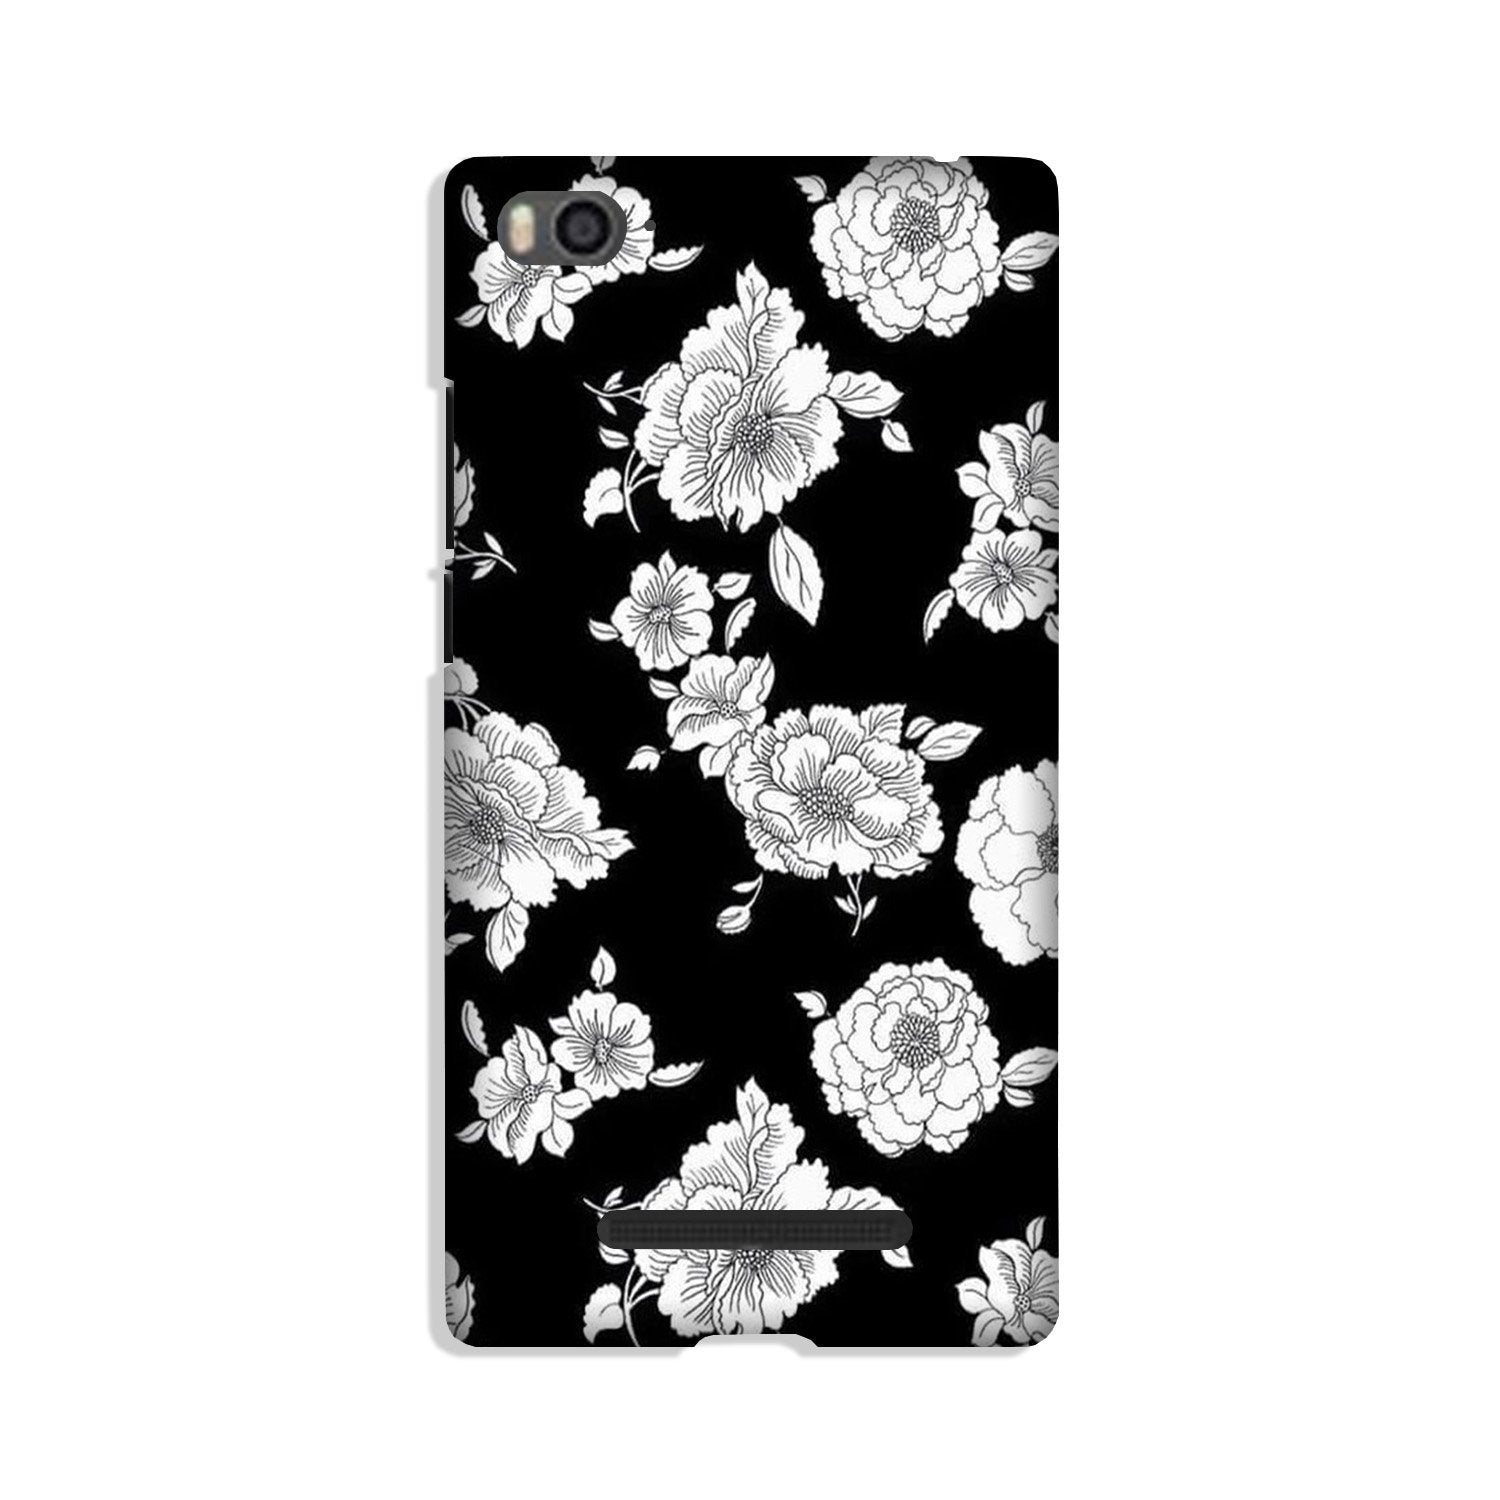 White flowers Black Background Case for Xiaomi Redmi 5A